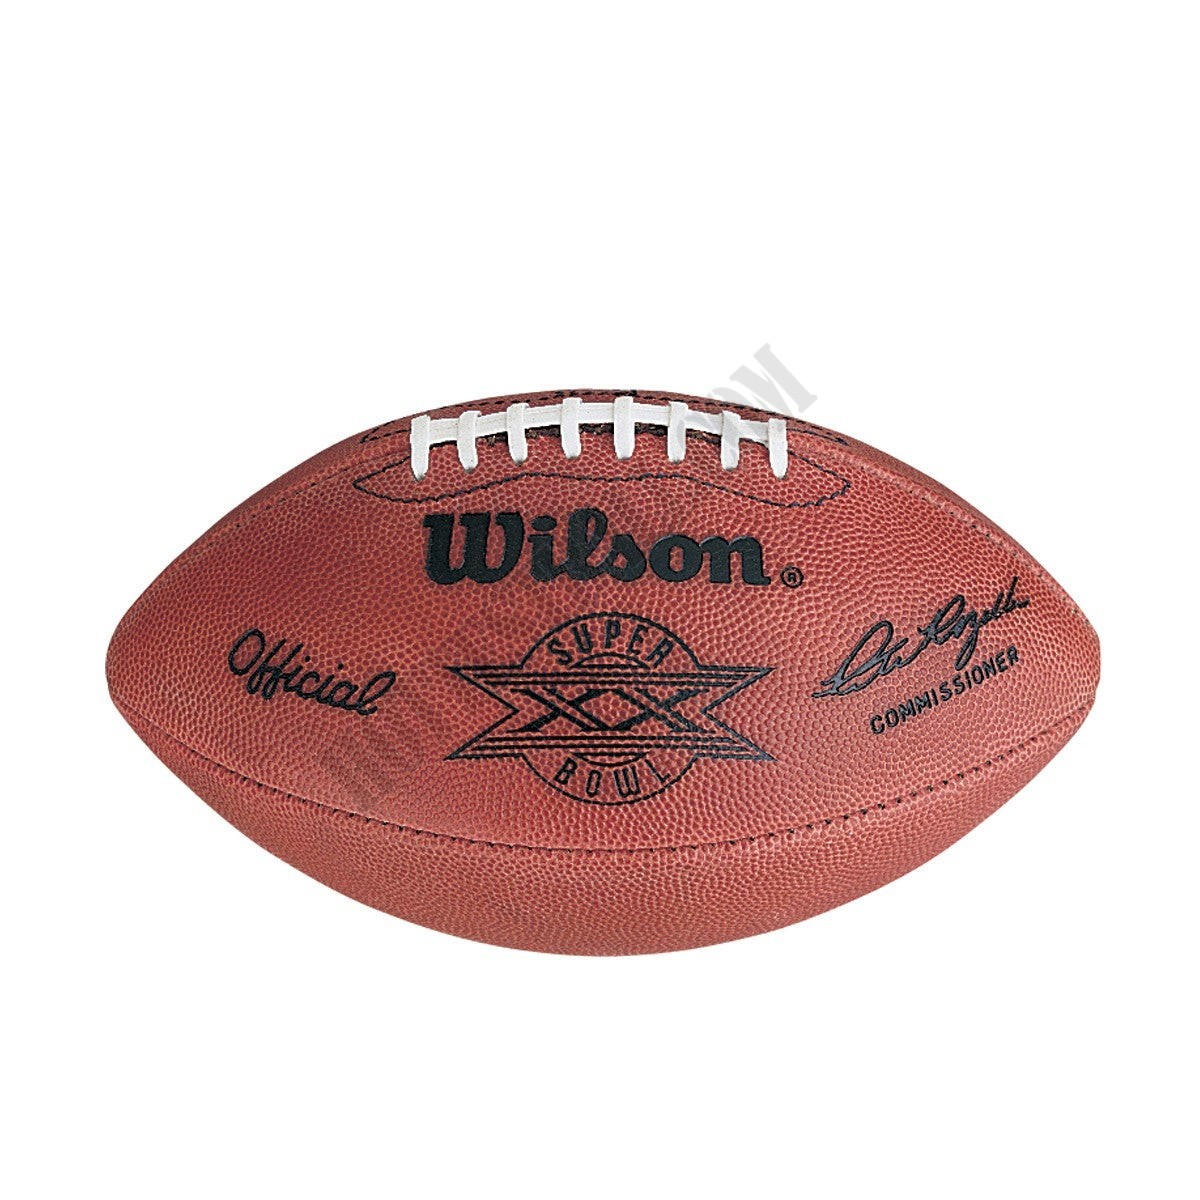 Super Bowl XX Game Football - Chicago Bears ● Wilson Promotions - Super Bowl XX Game Football - Chicago Bears ● Wilson Promotions